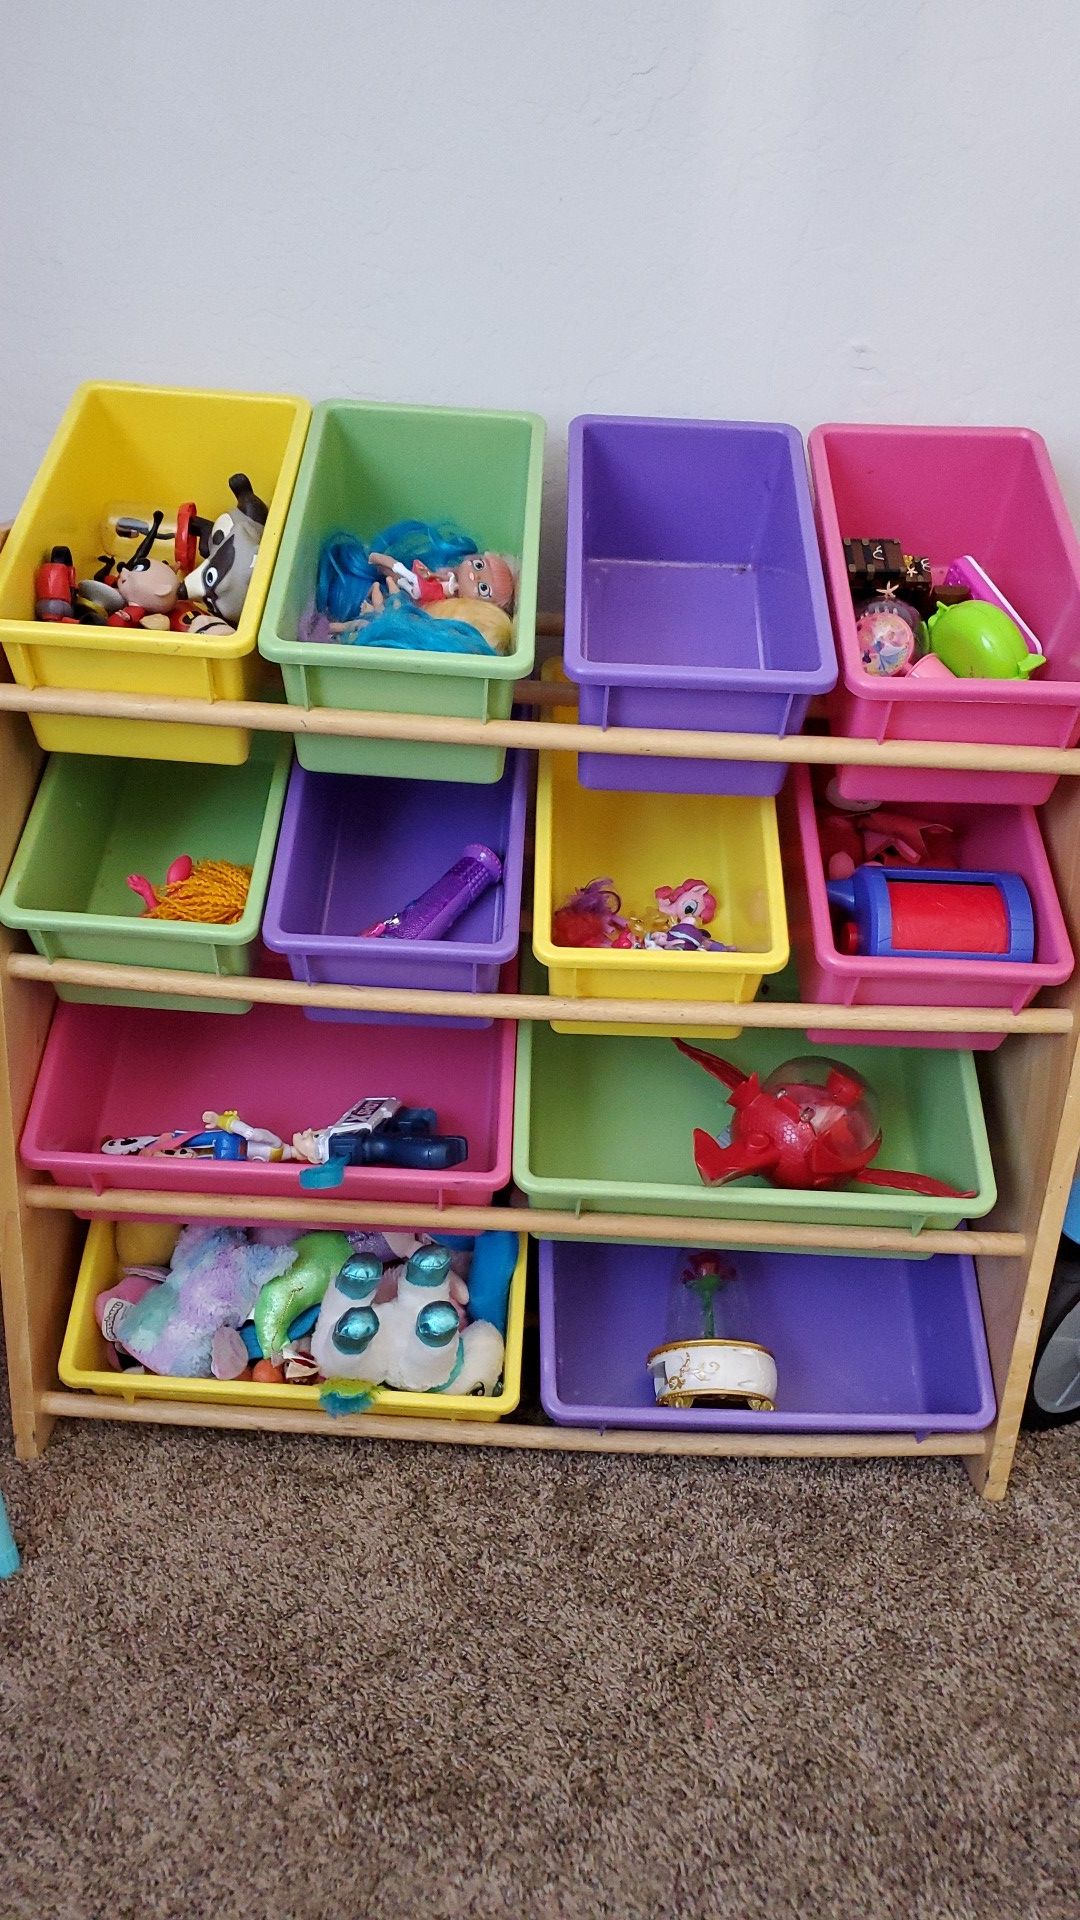 Toy bin organizer & toys